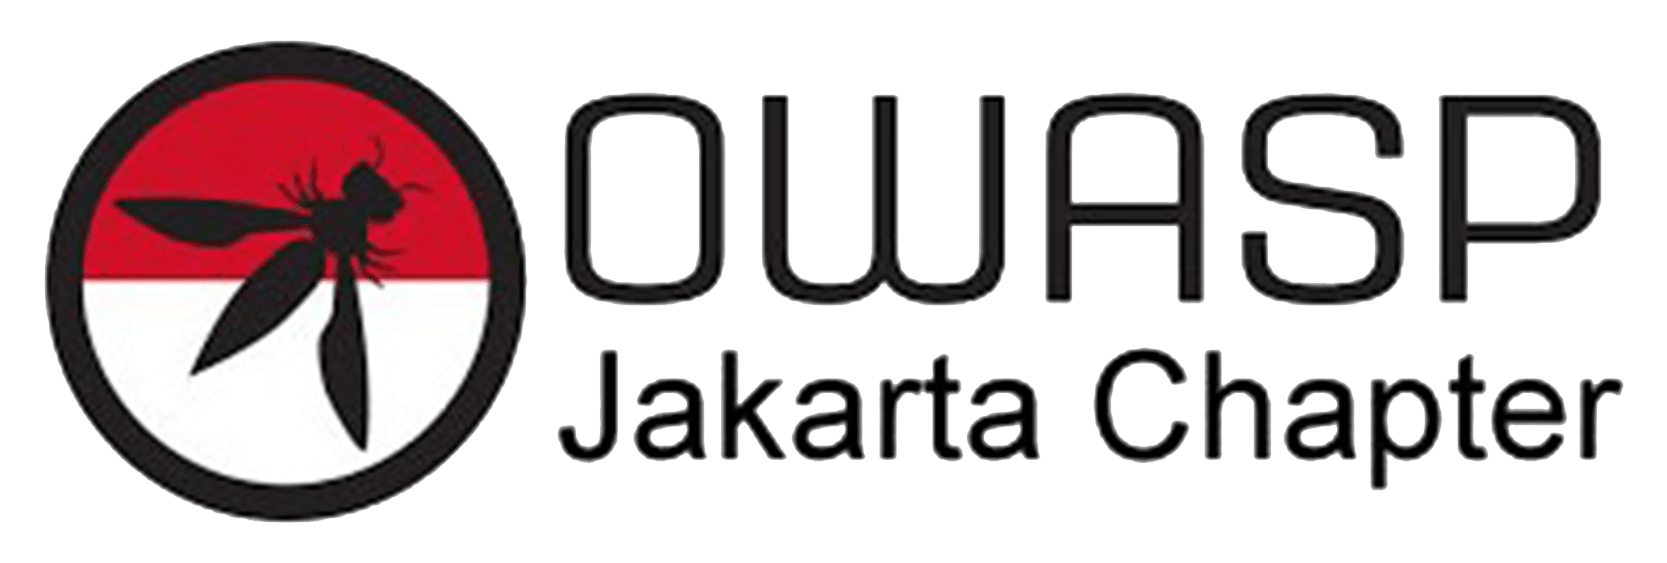 OWASP Jakarta